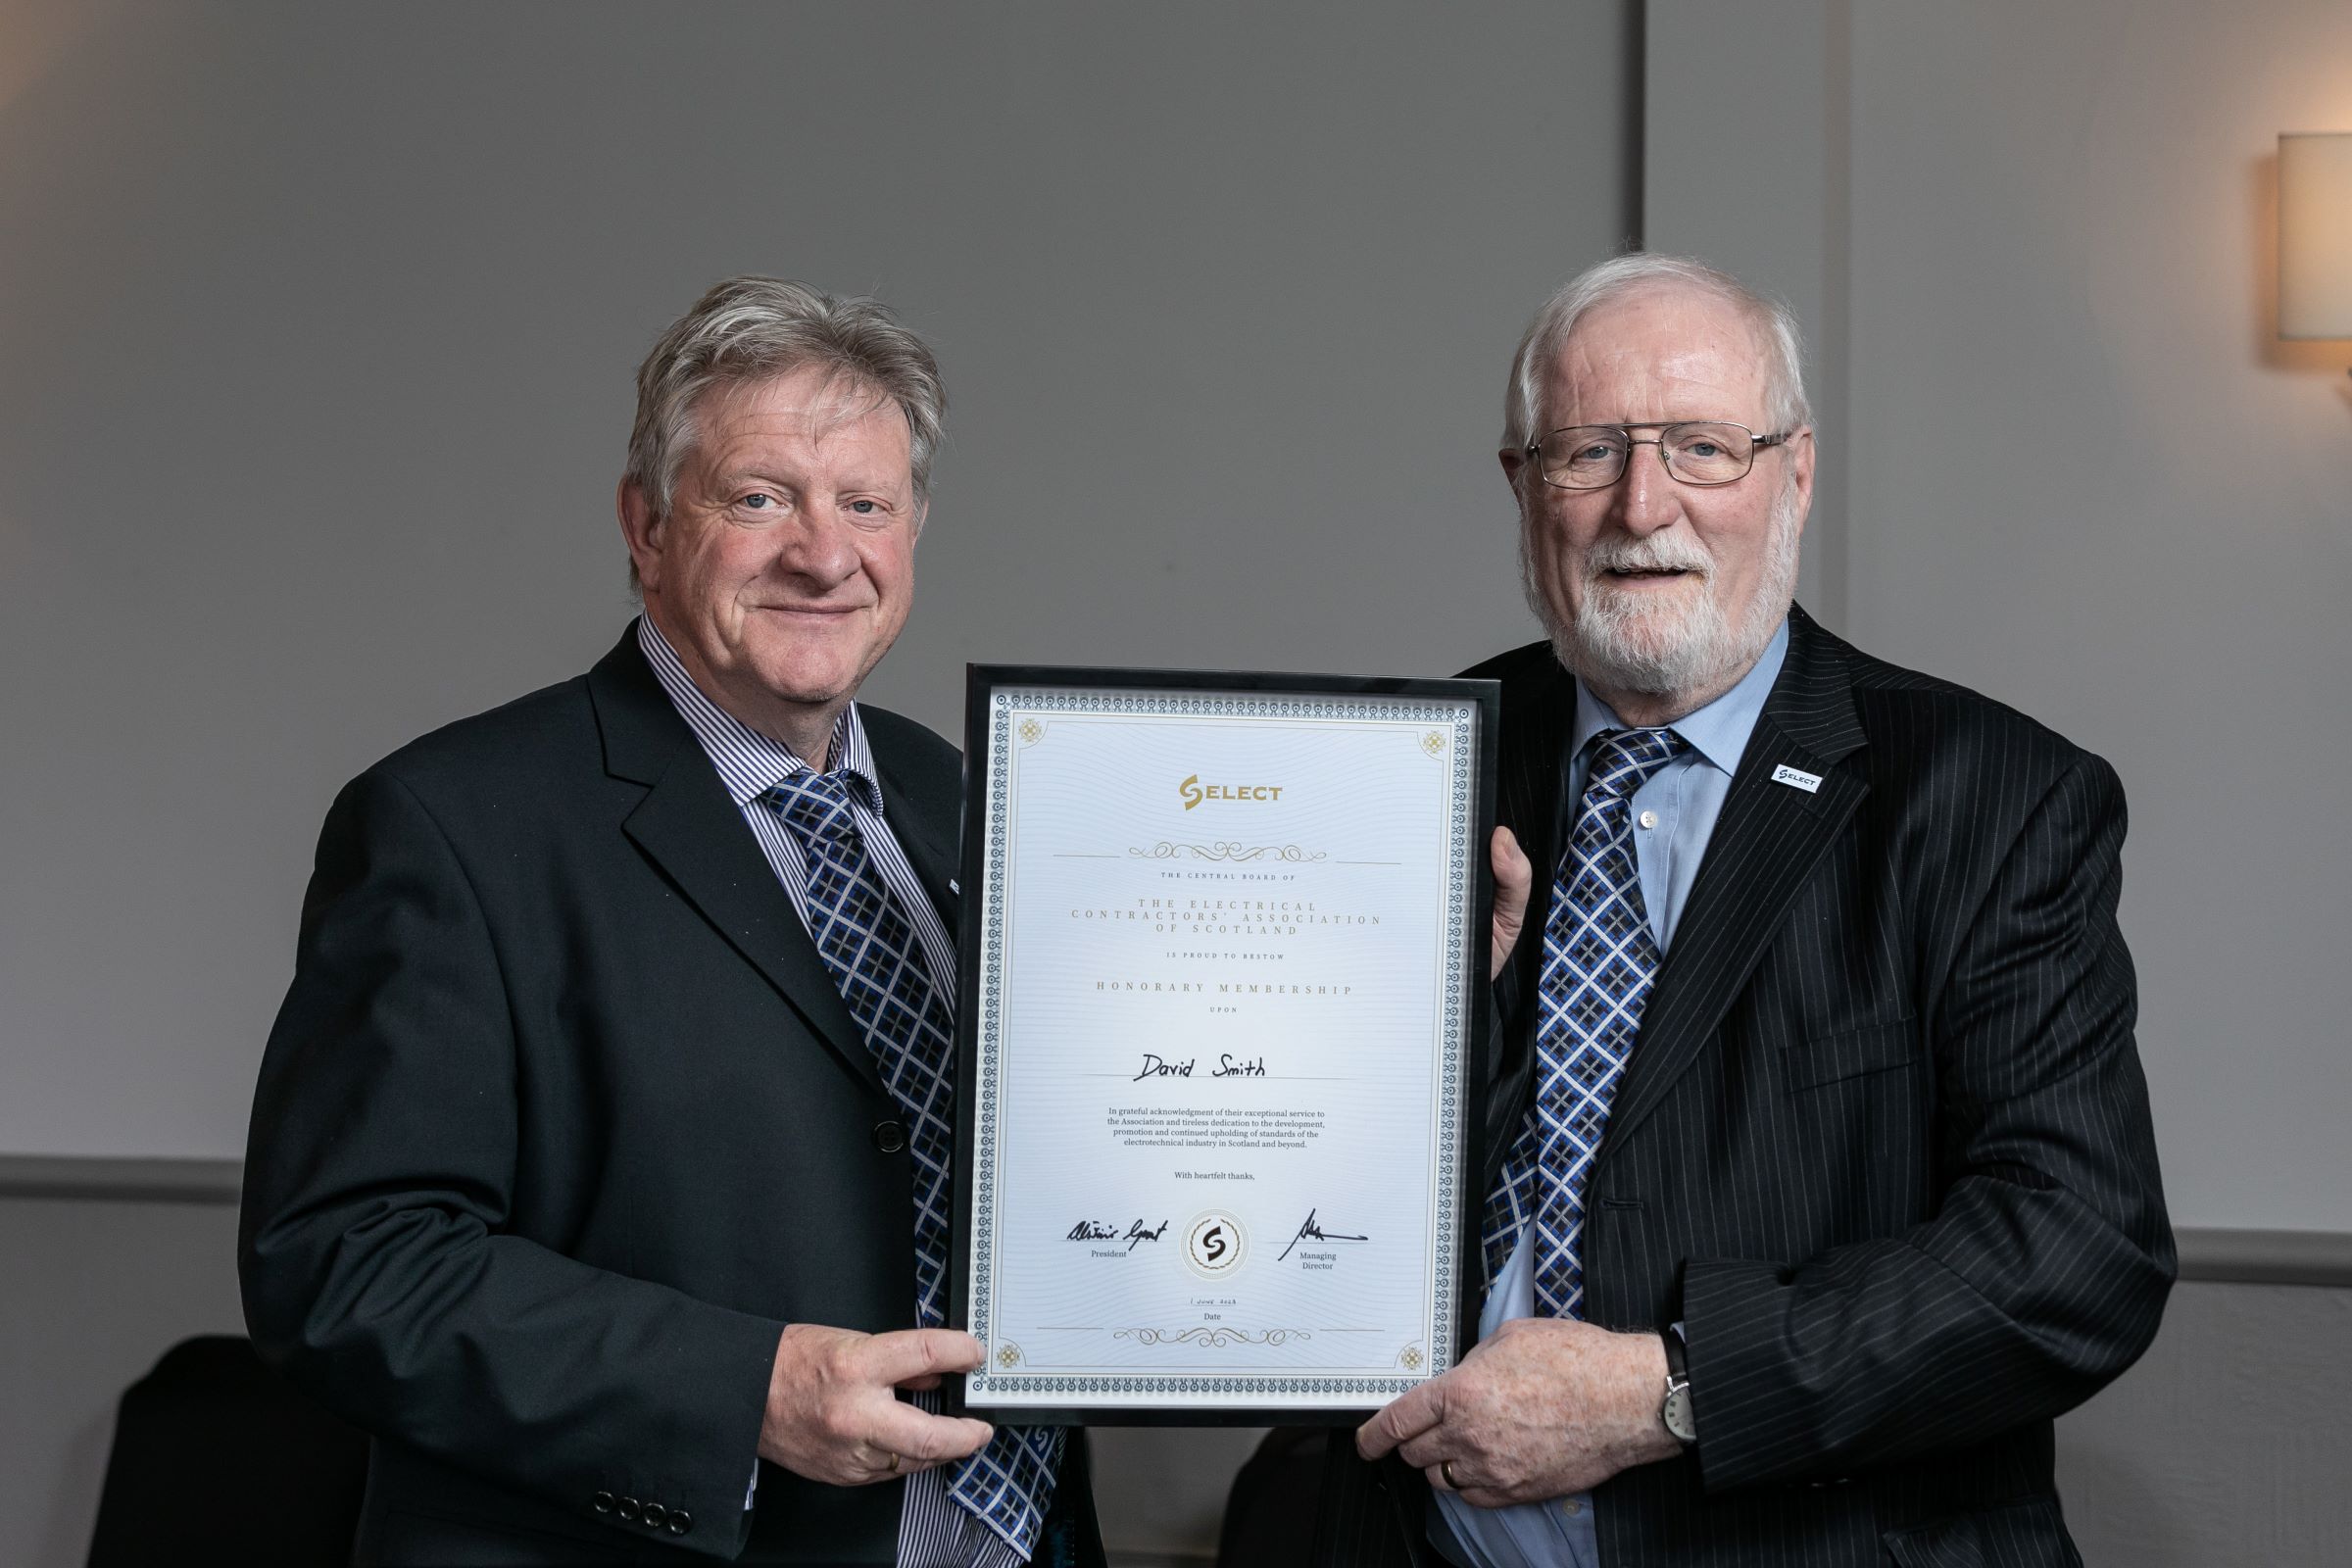 Past president David Smith awarded SELECT honorary membership